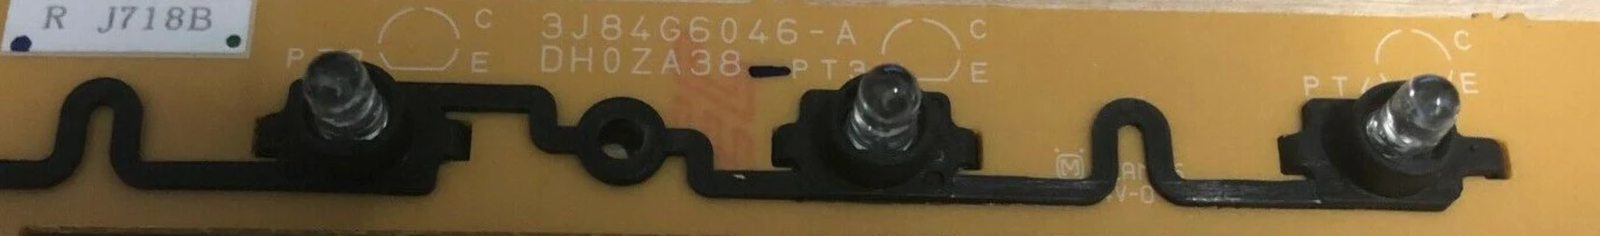 3J84G6046-A DH0ZA38 indicator light board for Lexmark X500N printer